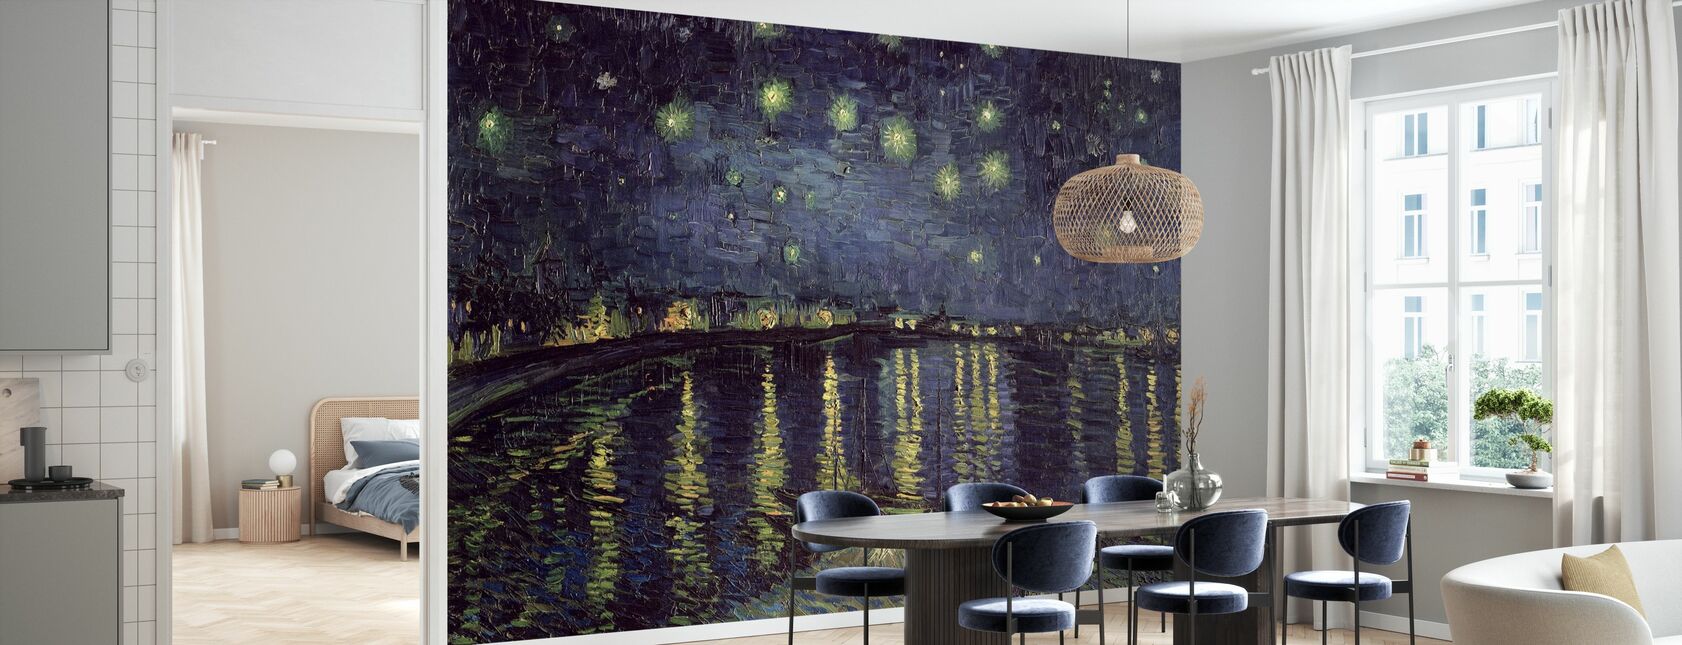 Starry Night - Vincent van Gogh - Wallpaper - Kitchen